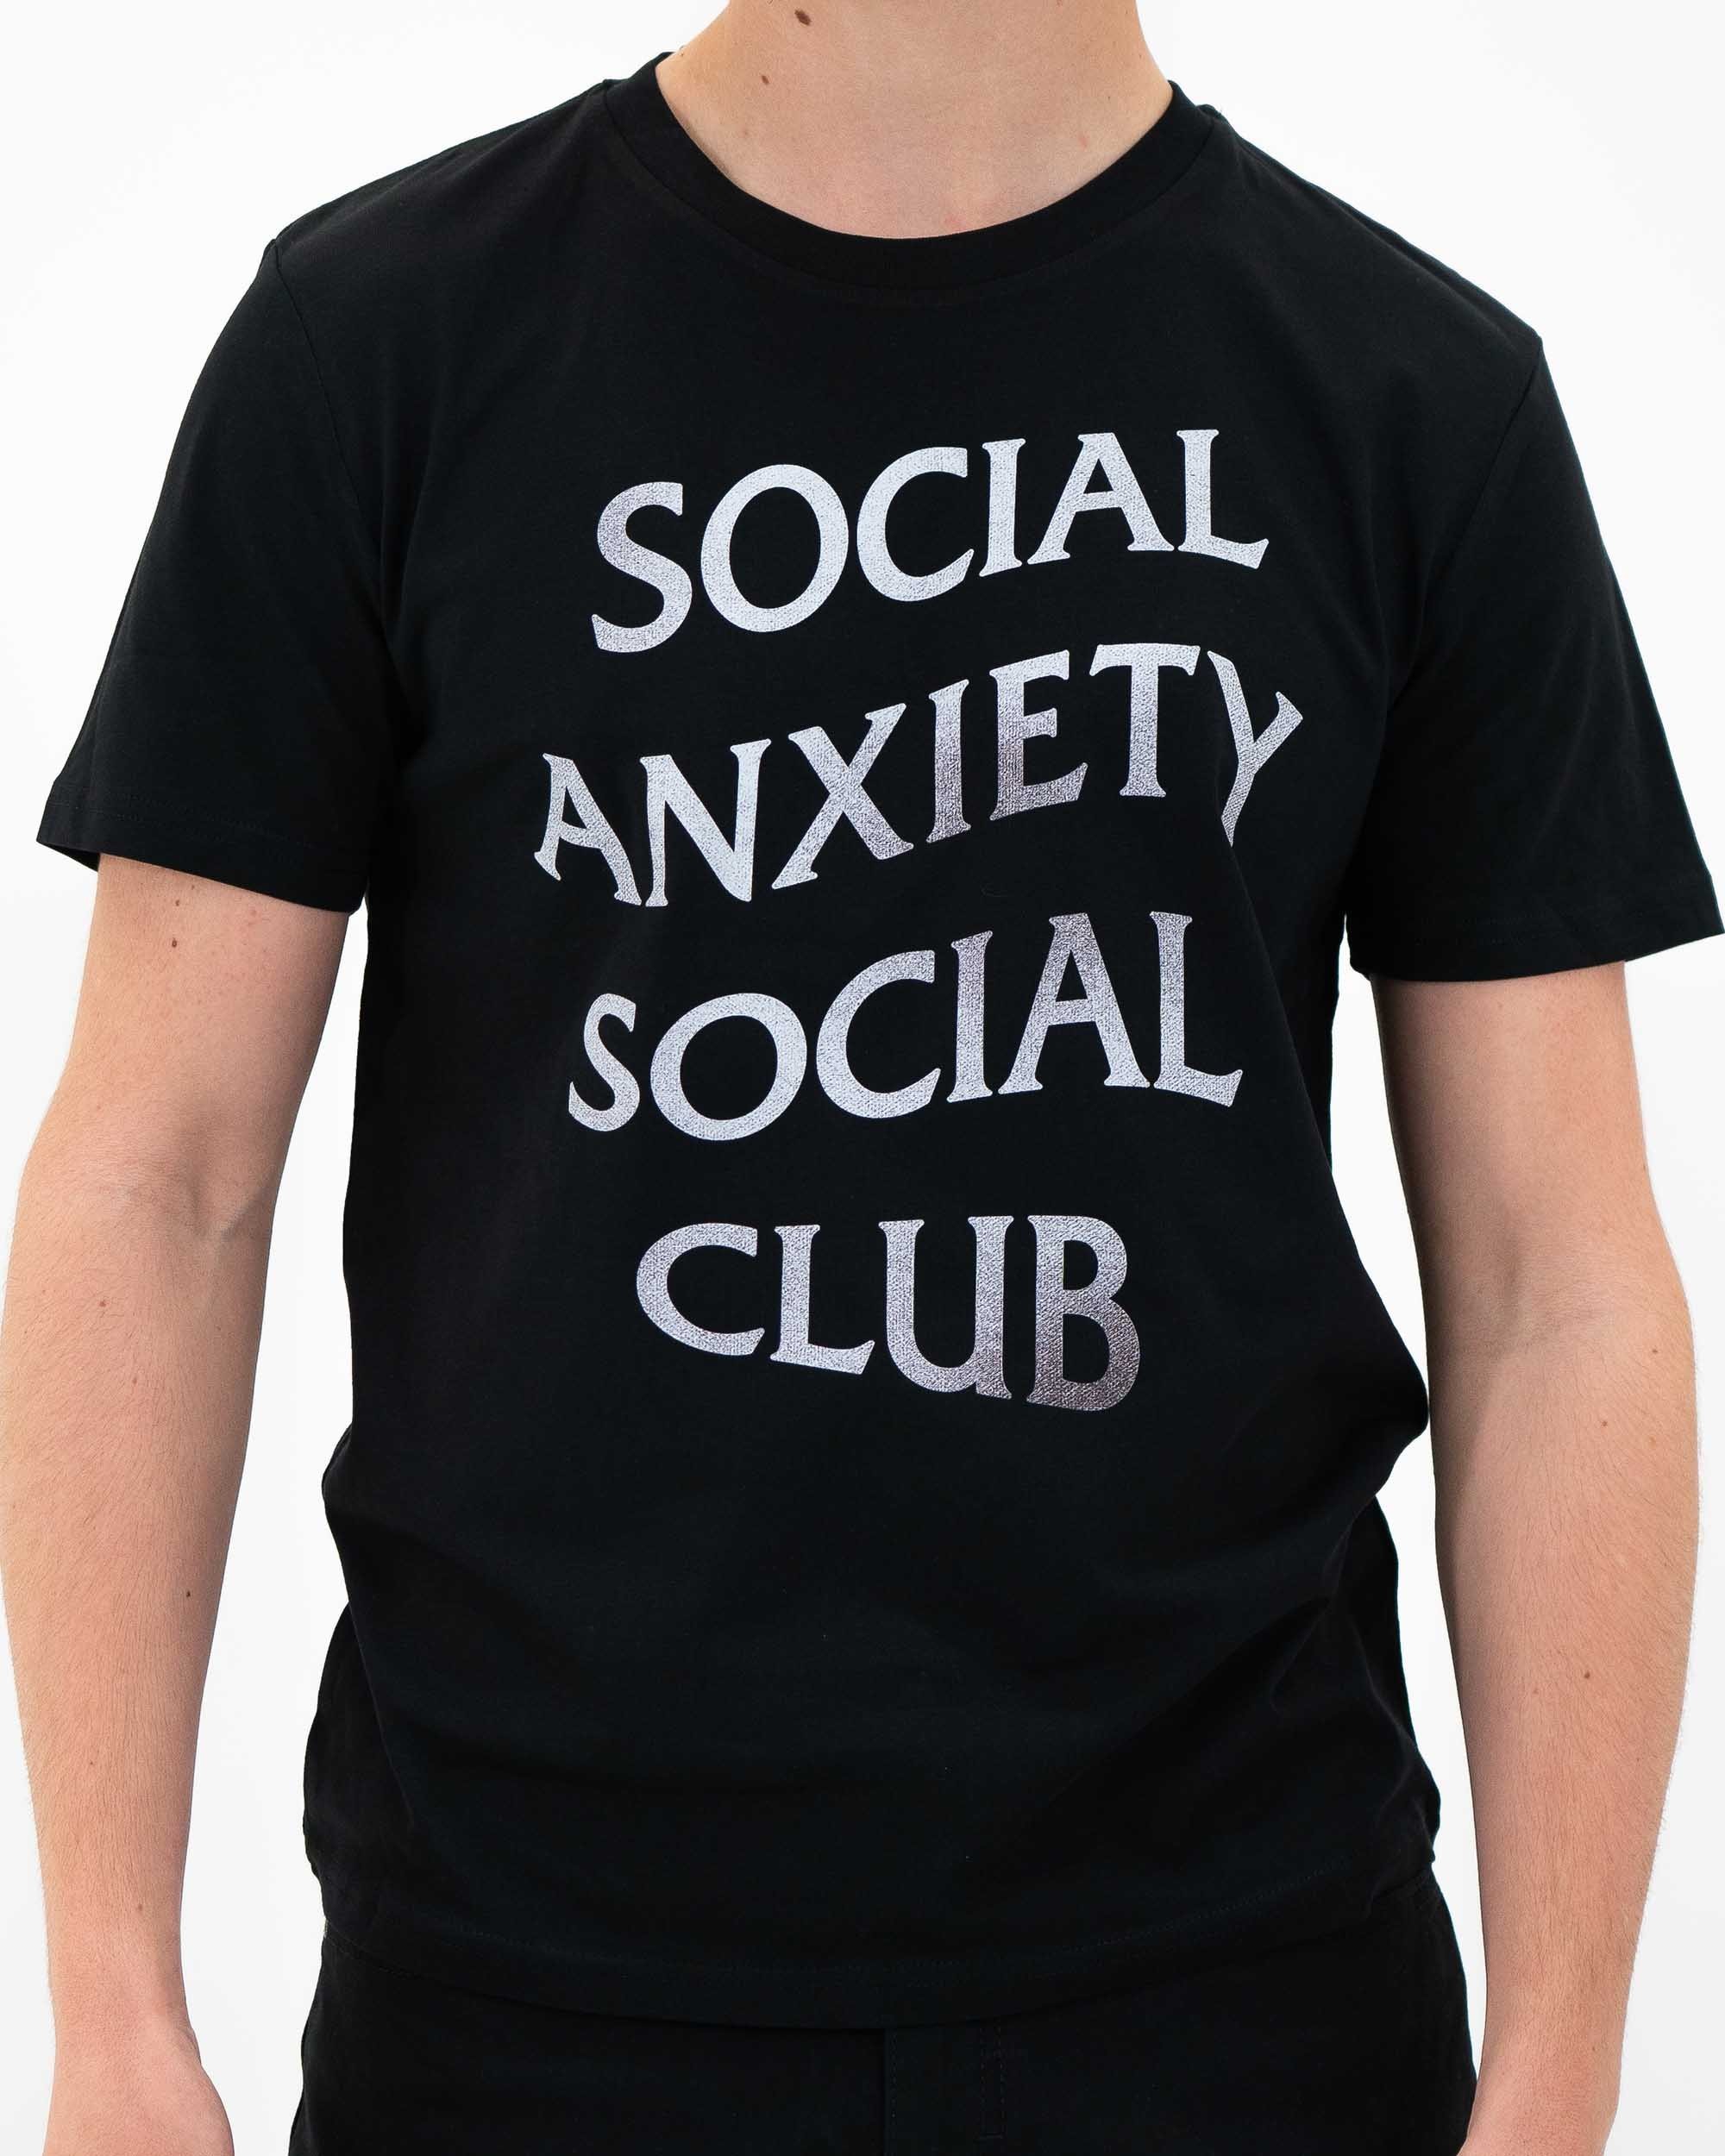 T-shirt Social Anxiety Social Club de couleur Noir par rodrigobhz